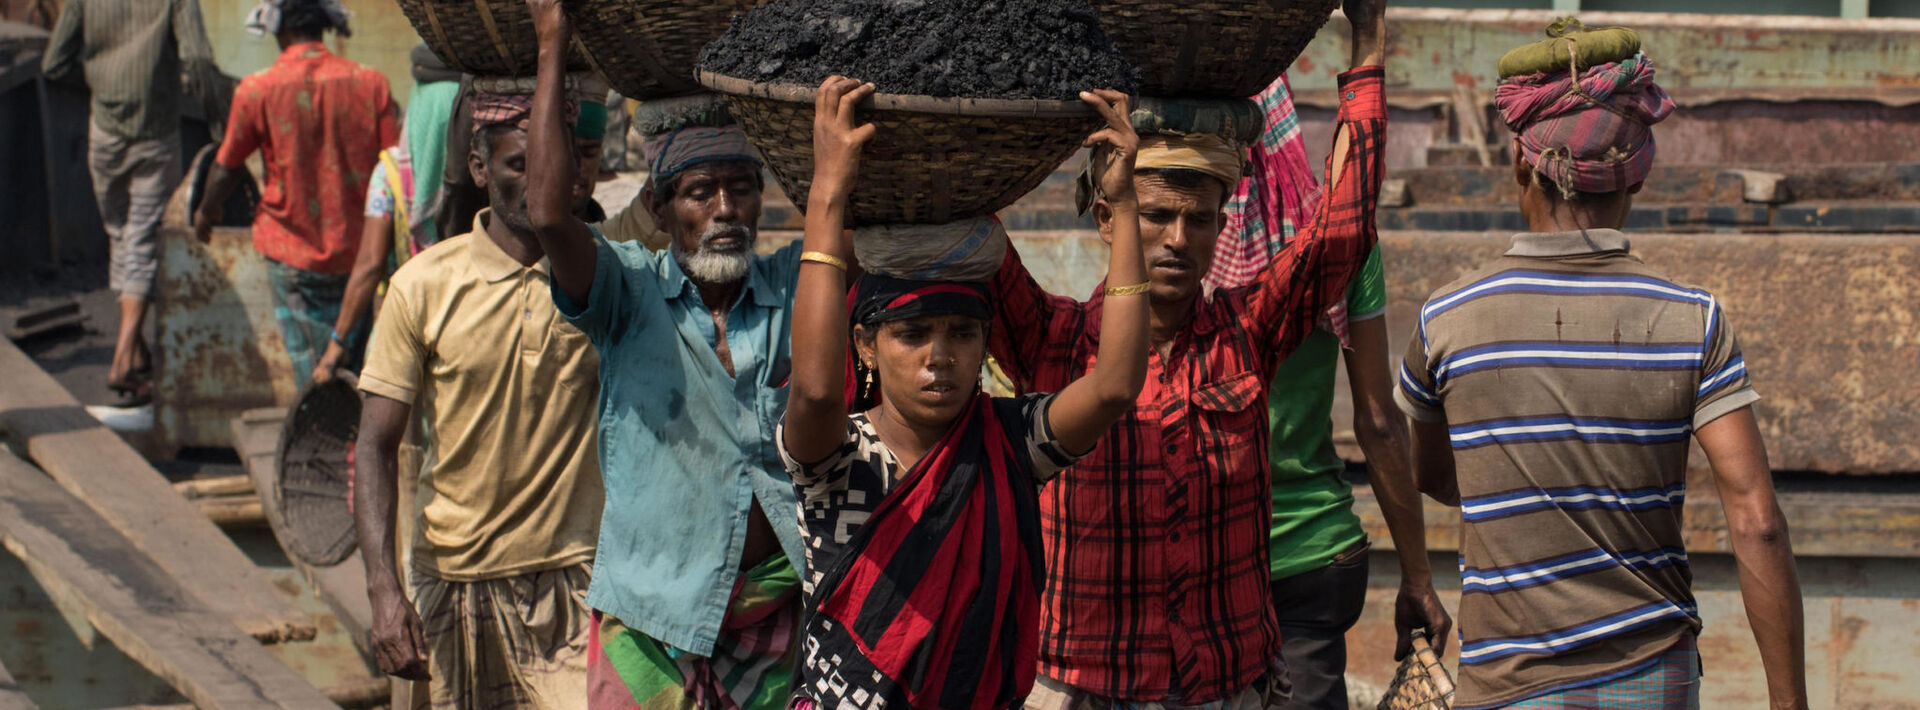 Workers unload coal in Dhaka